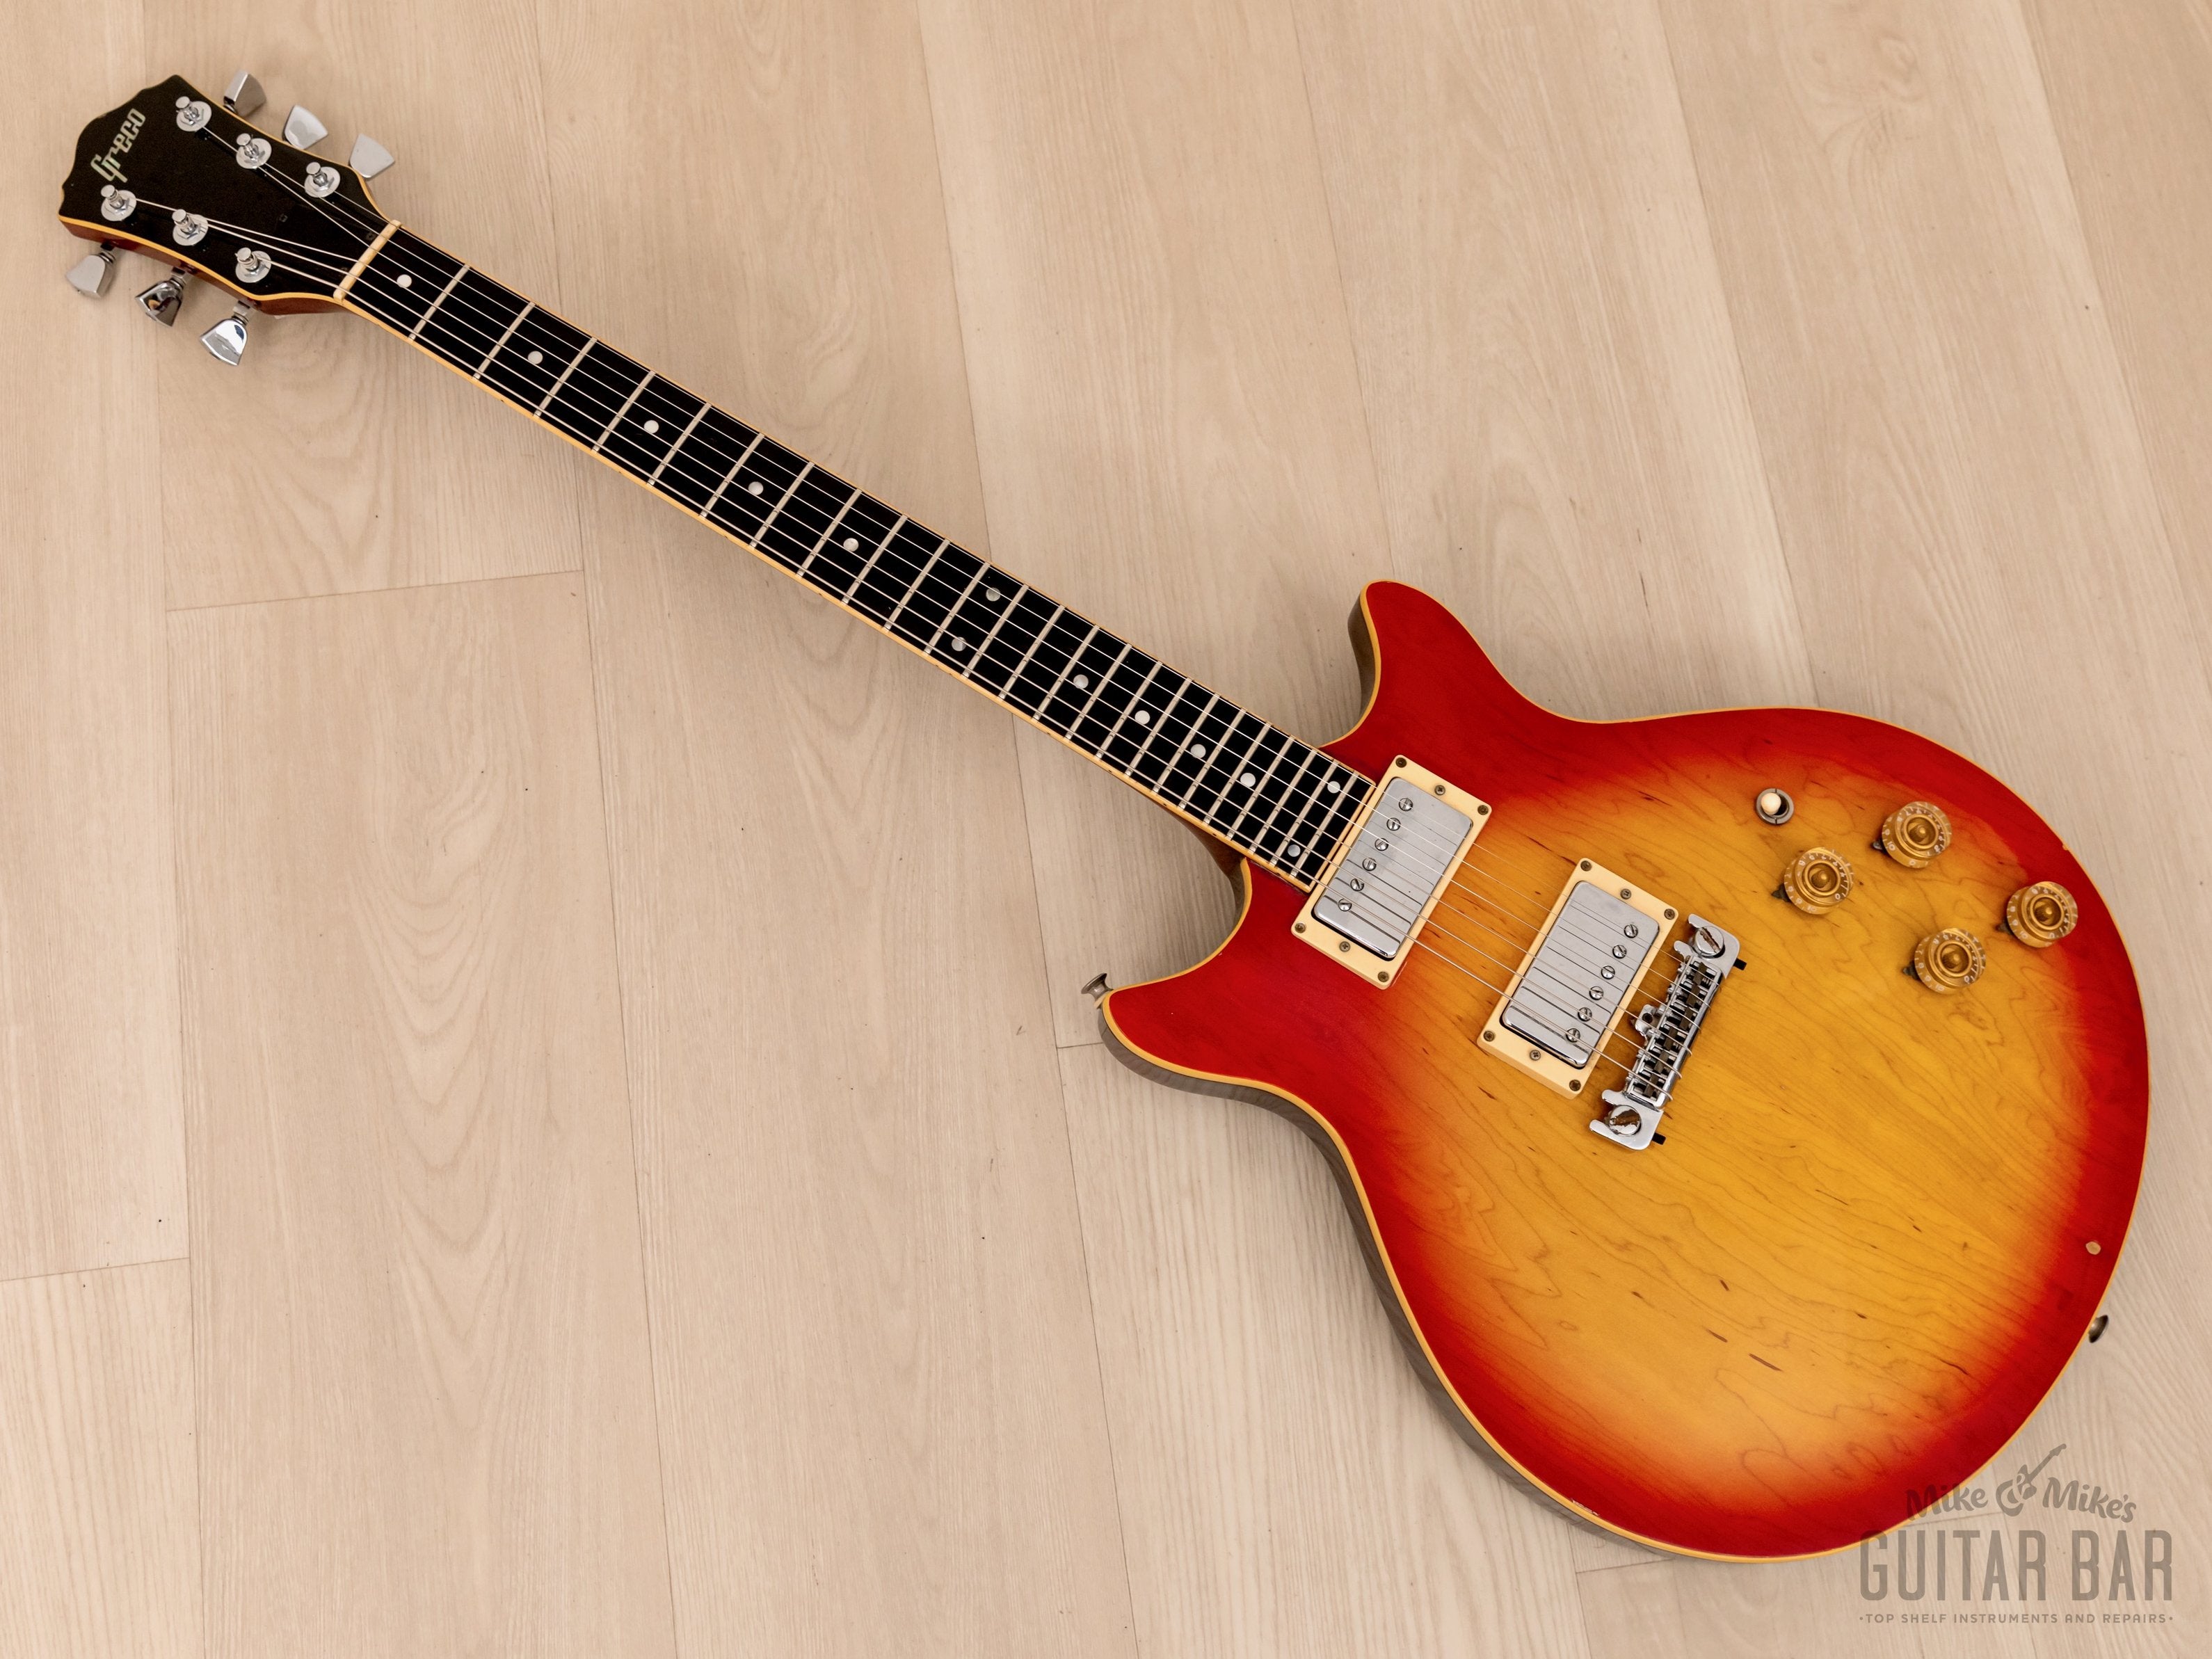 1977 Greco MR800 Mick Ralphs Signature Vintage Double Cutaway Guitar w/ Maxon U-2000 & Case, Japan Fujigen